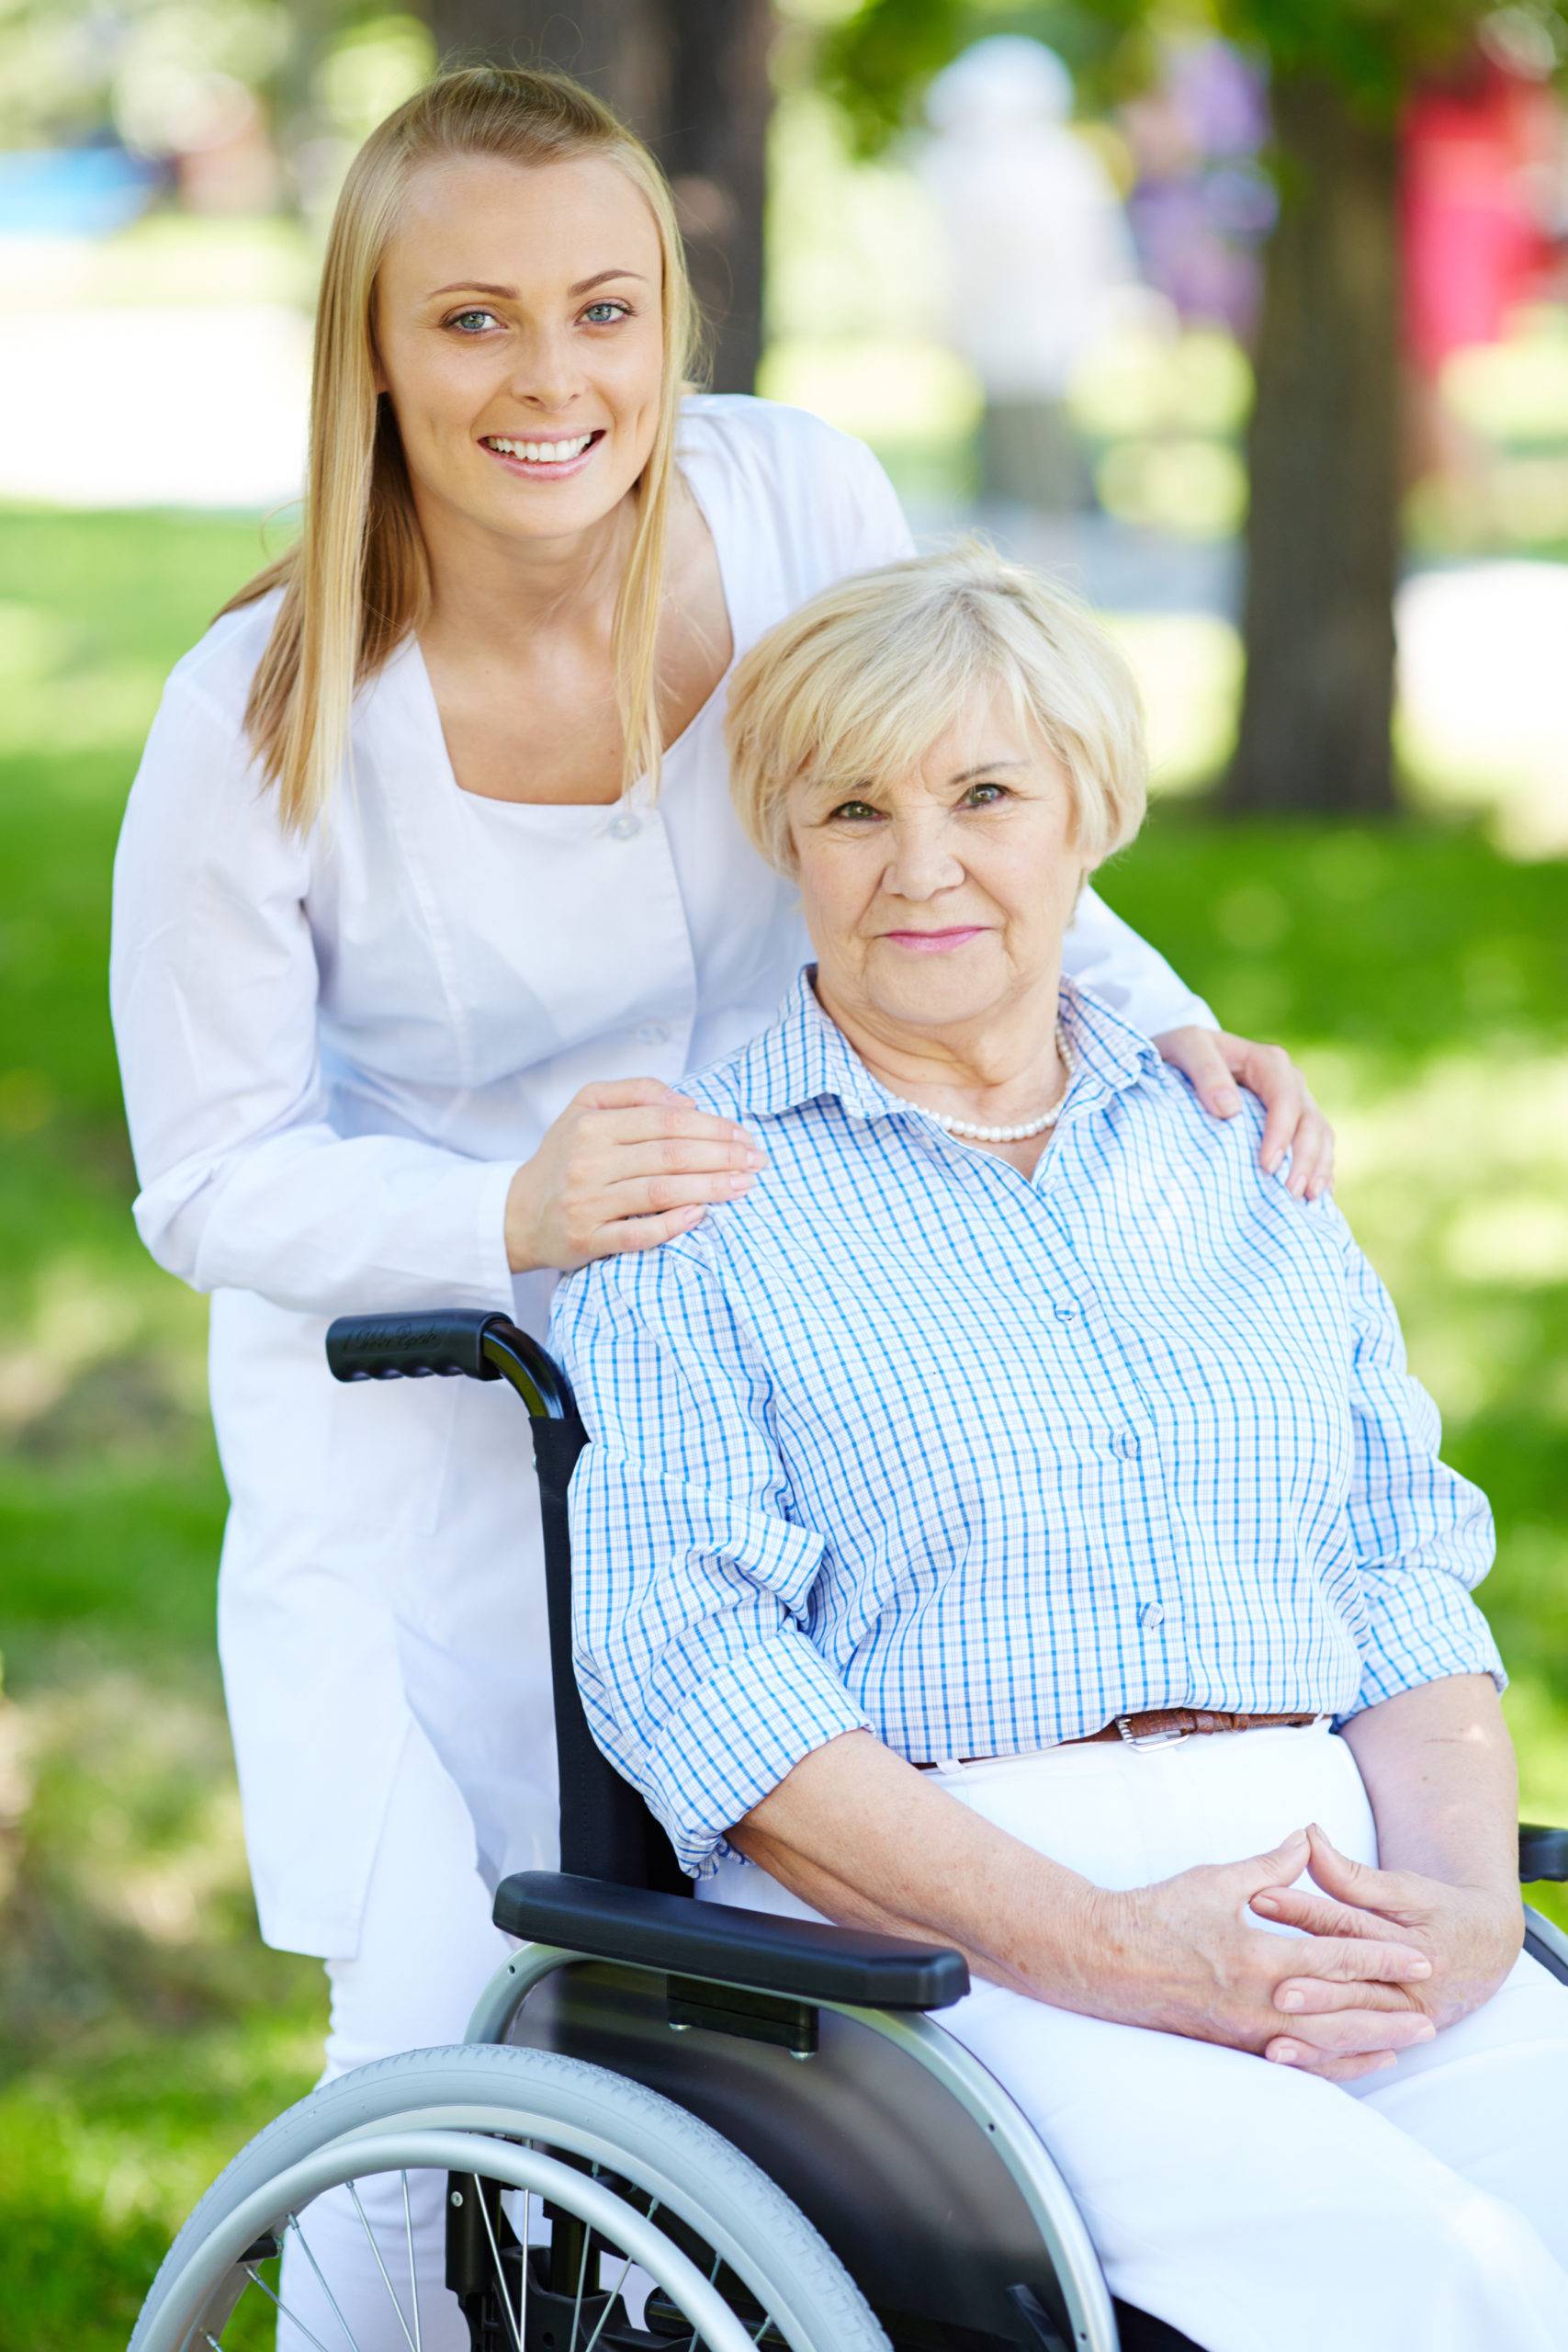 A nurse behind an elderly woman sitting on a wheelchair